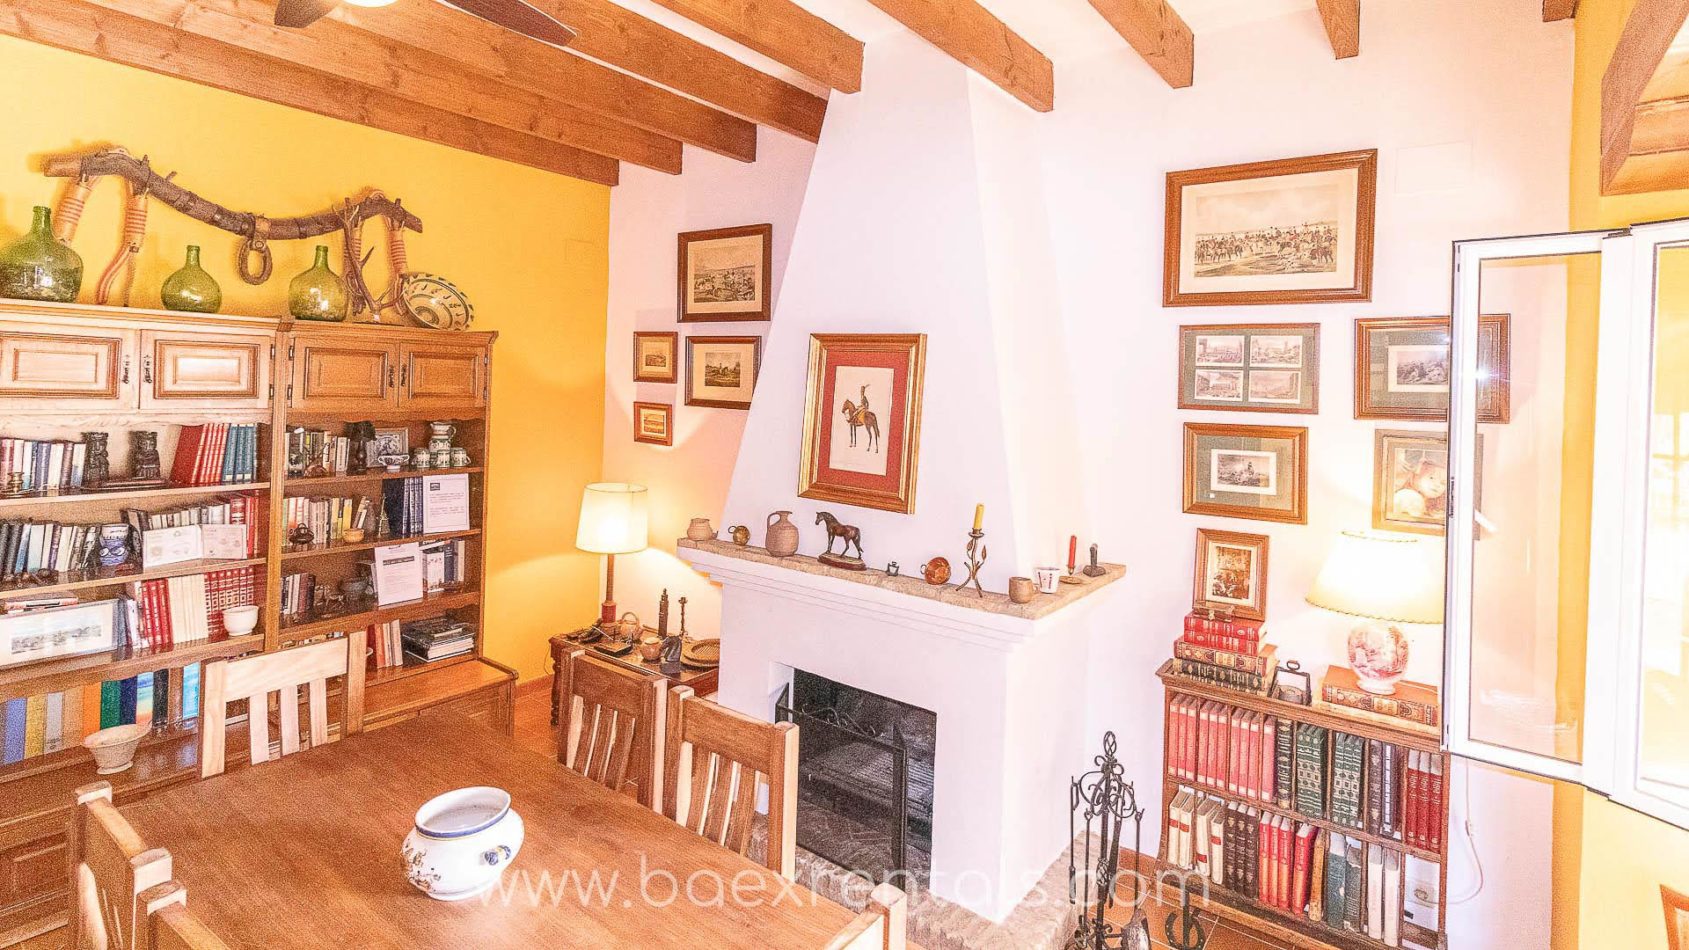 Casa rural en la Campiña de Sevilla. ¡Ven a Visitar Andalucía!